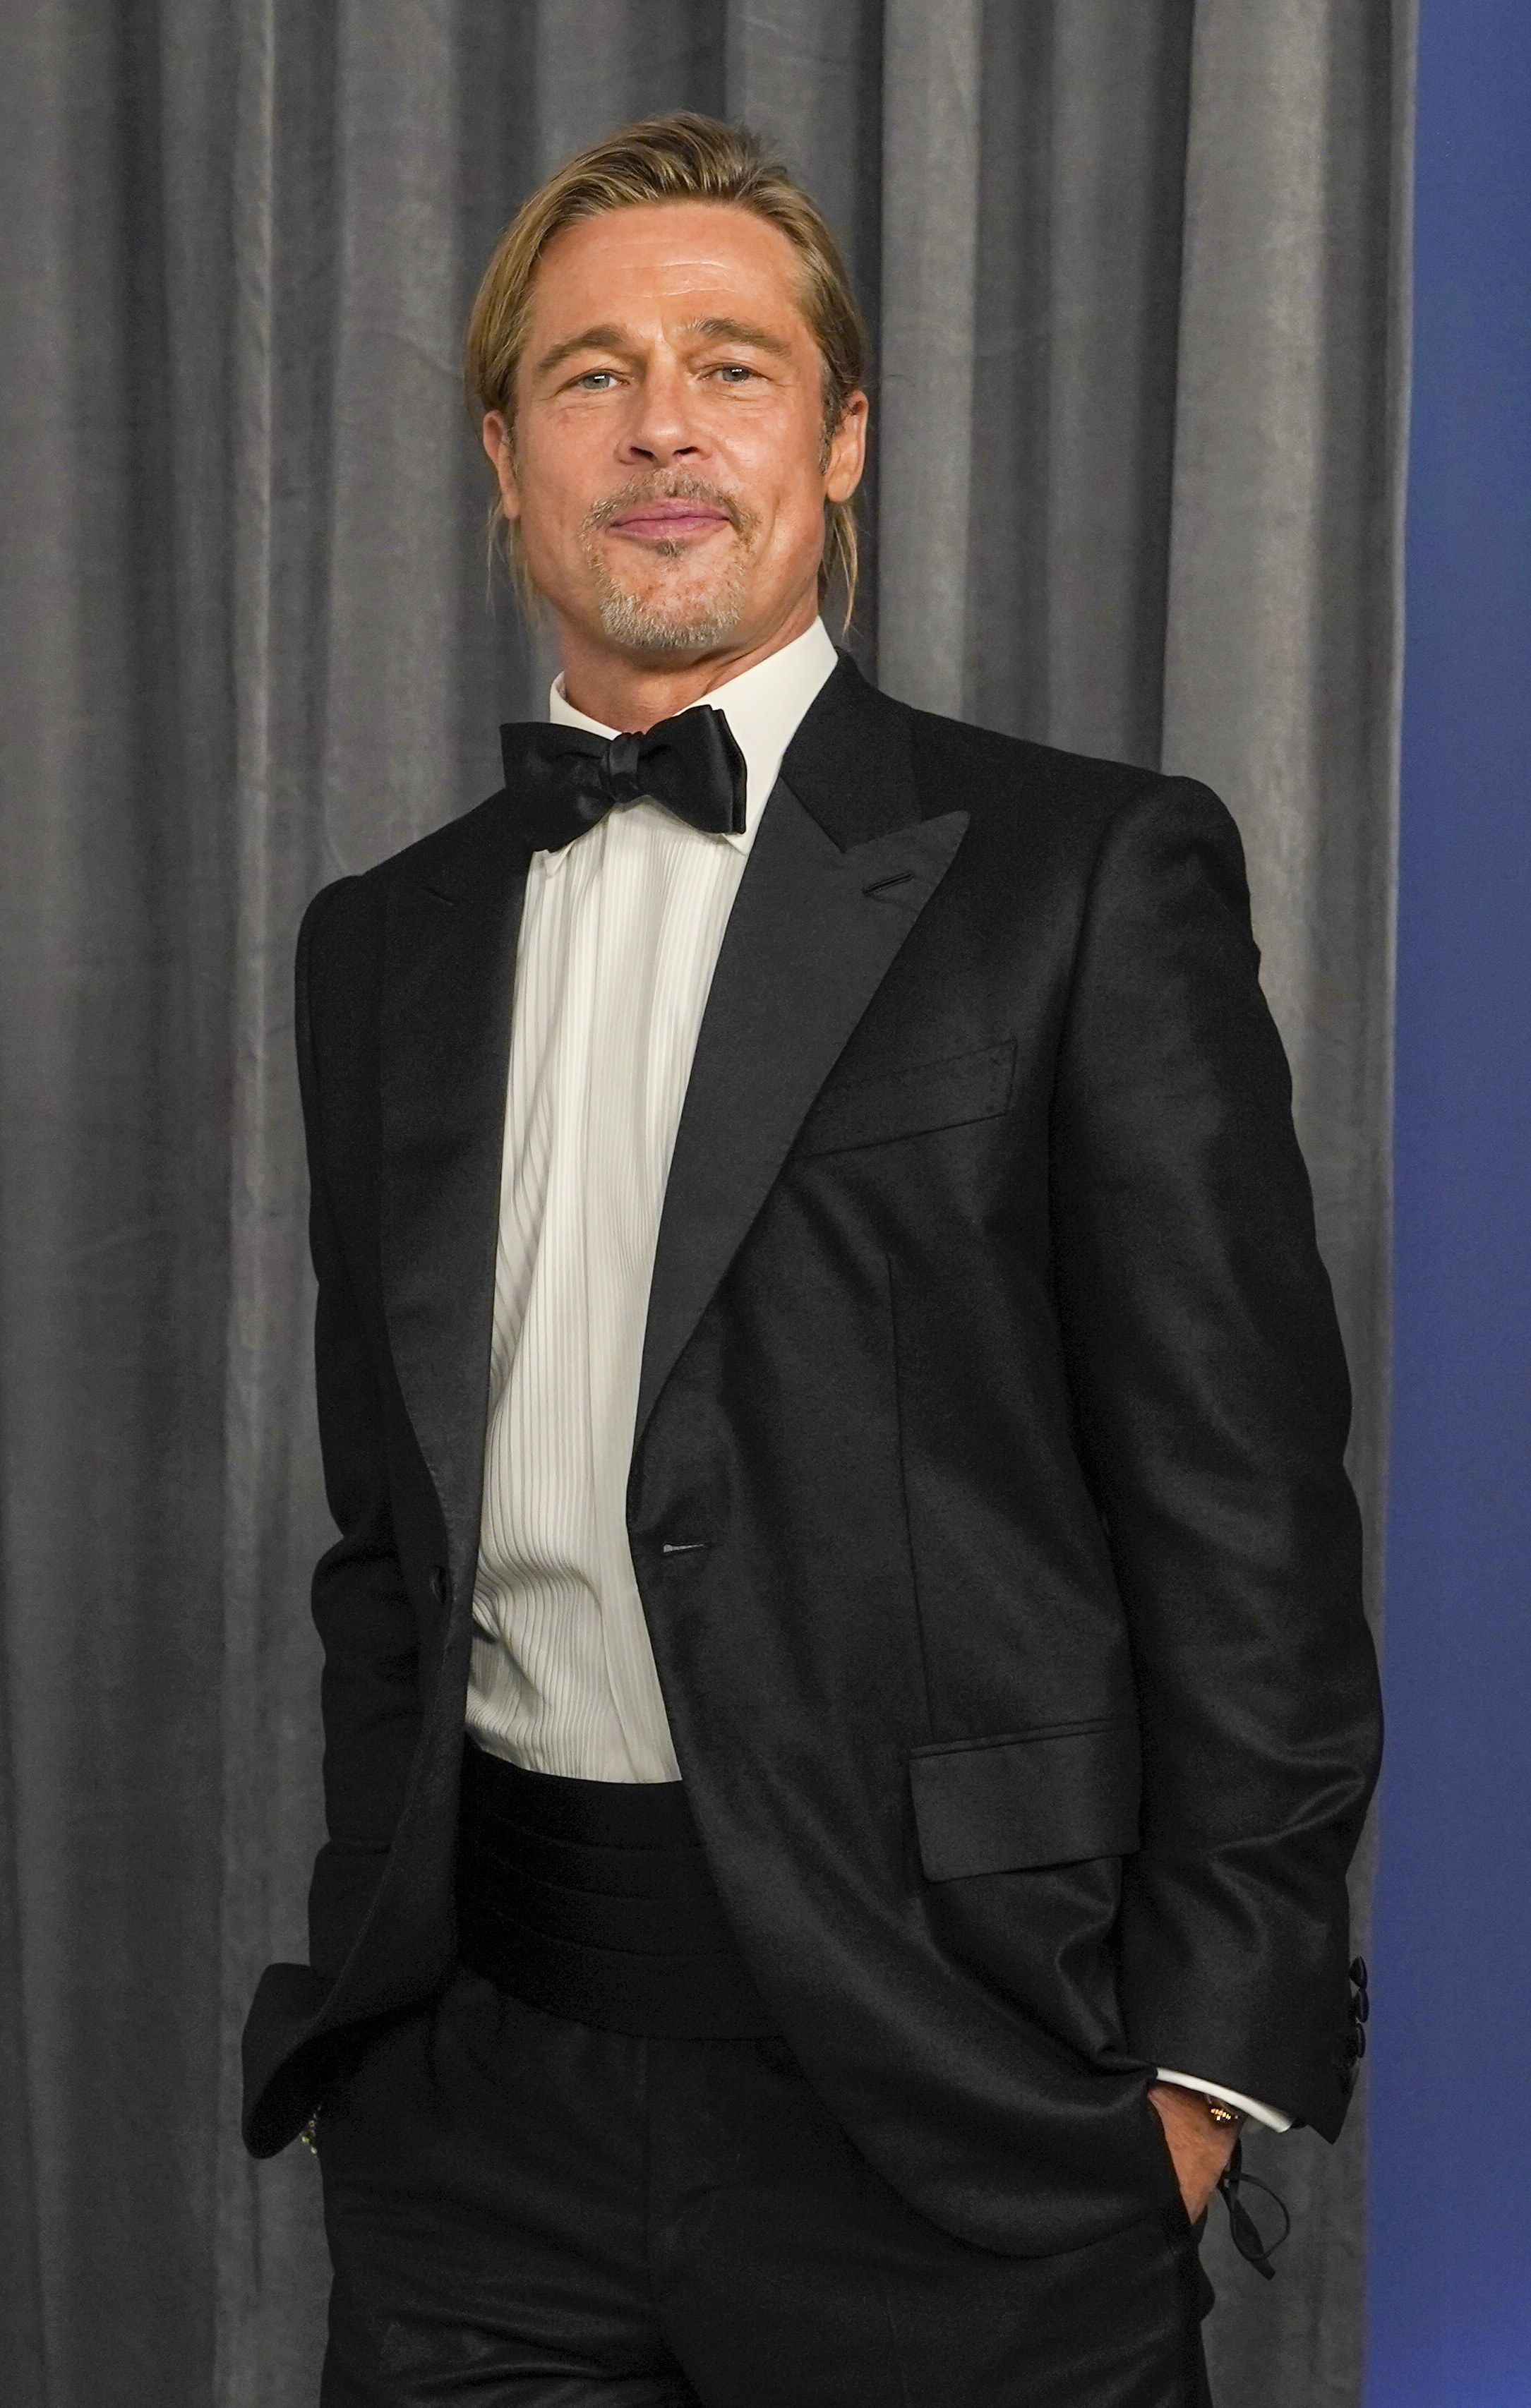 Brad Pitt poses at the Oscars press room in LA on April 25, 2021